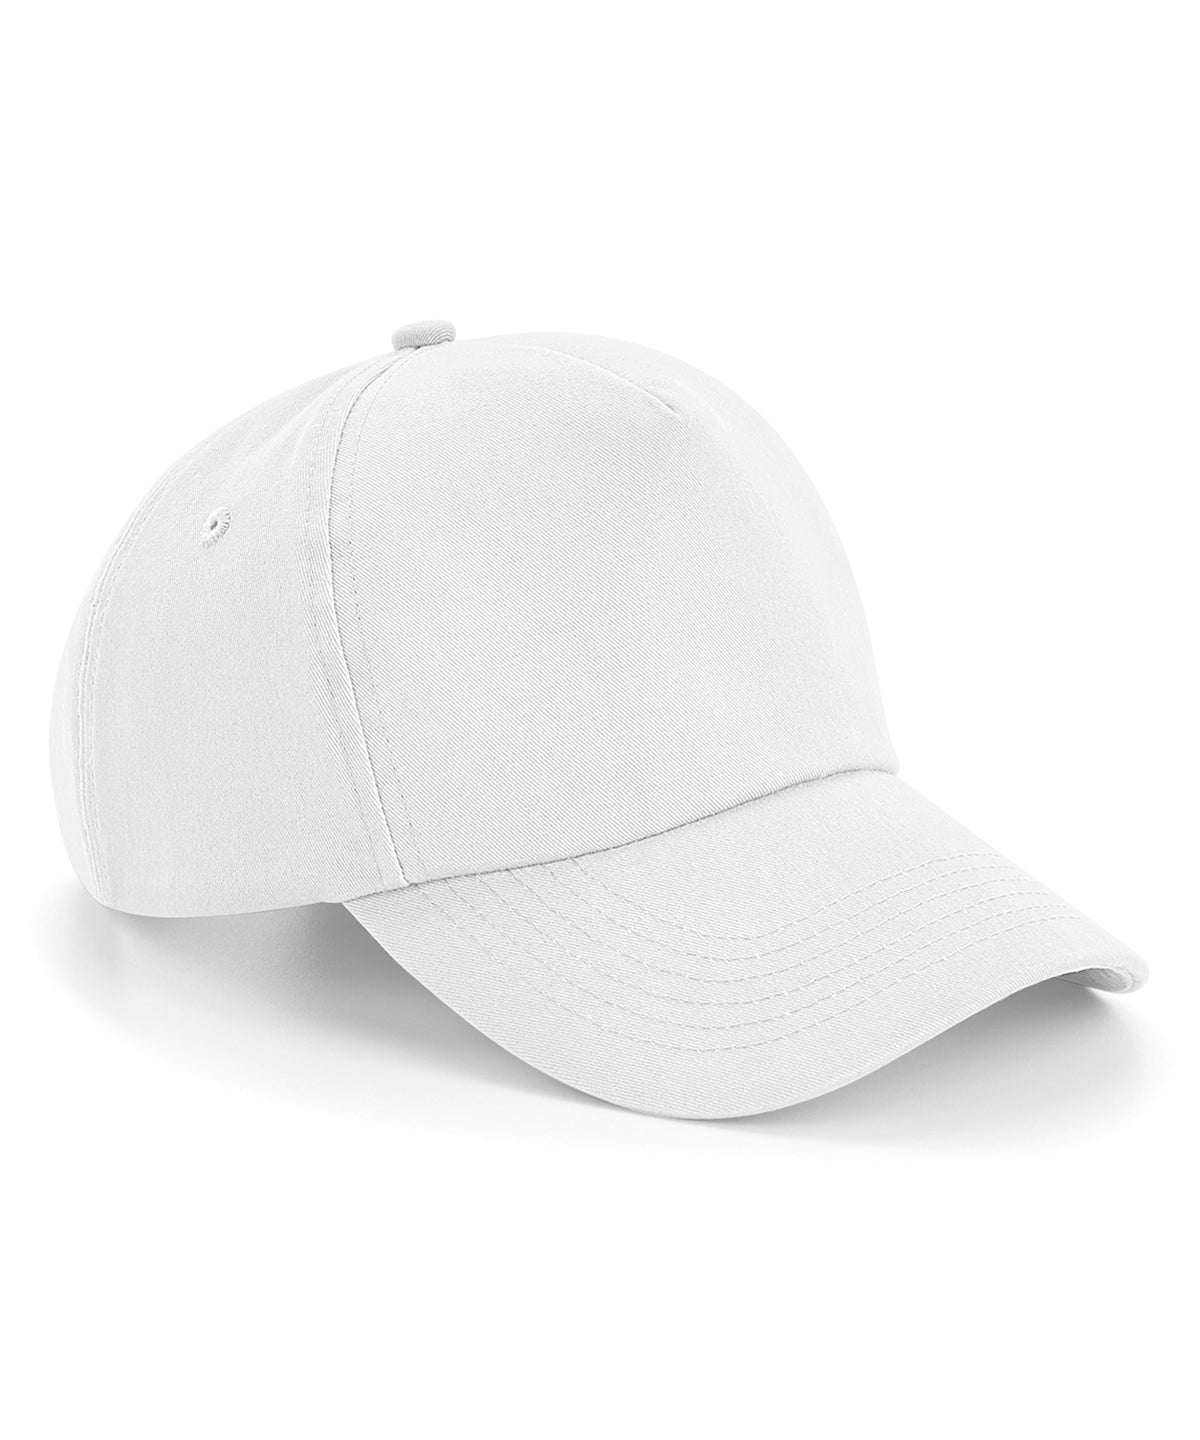 Personalised Caps - White Beechfield Authentic 5-panel cap